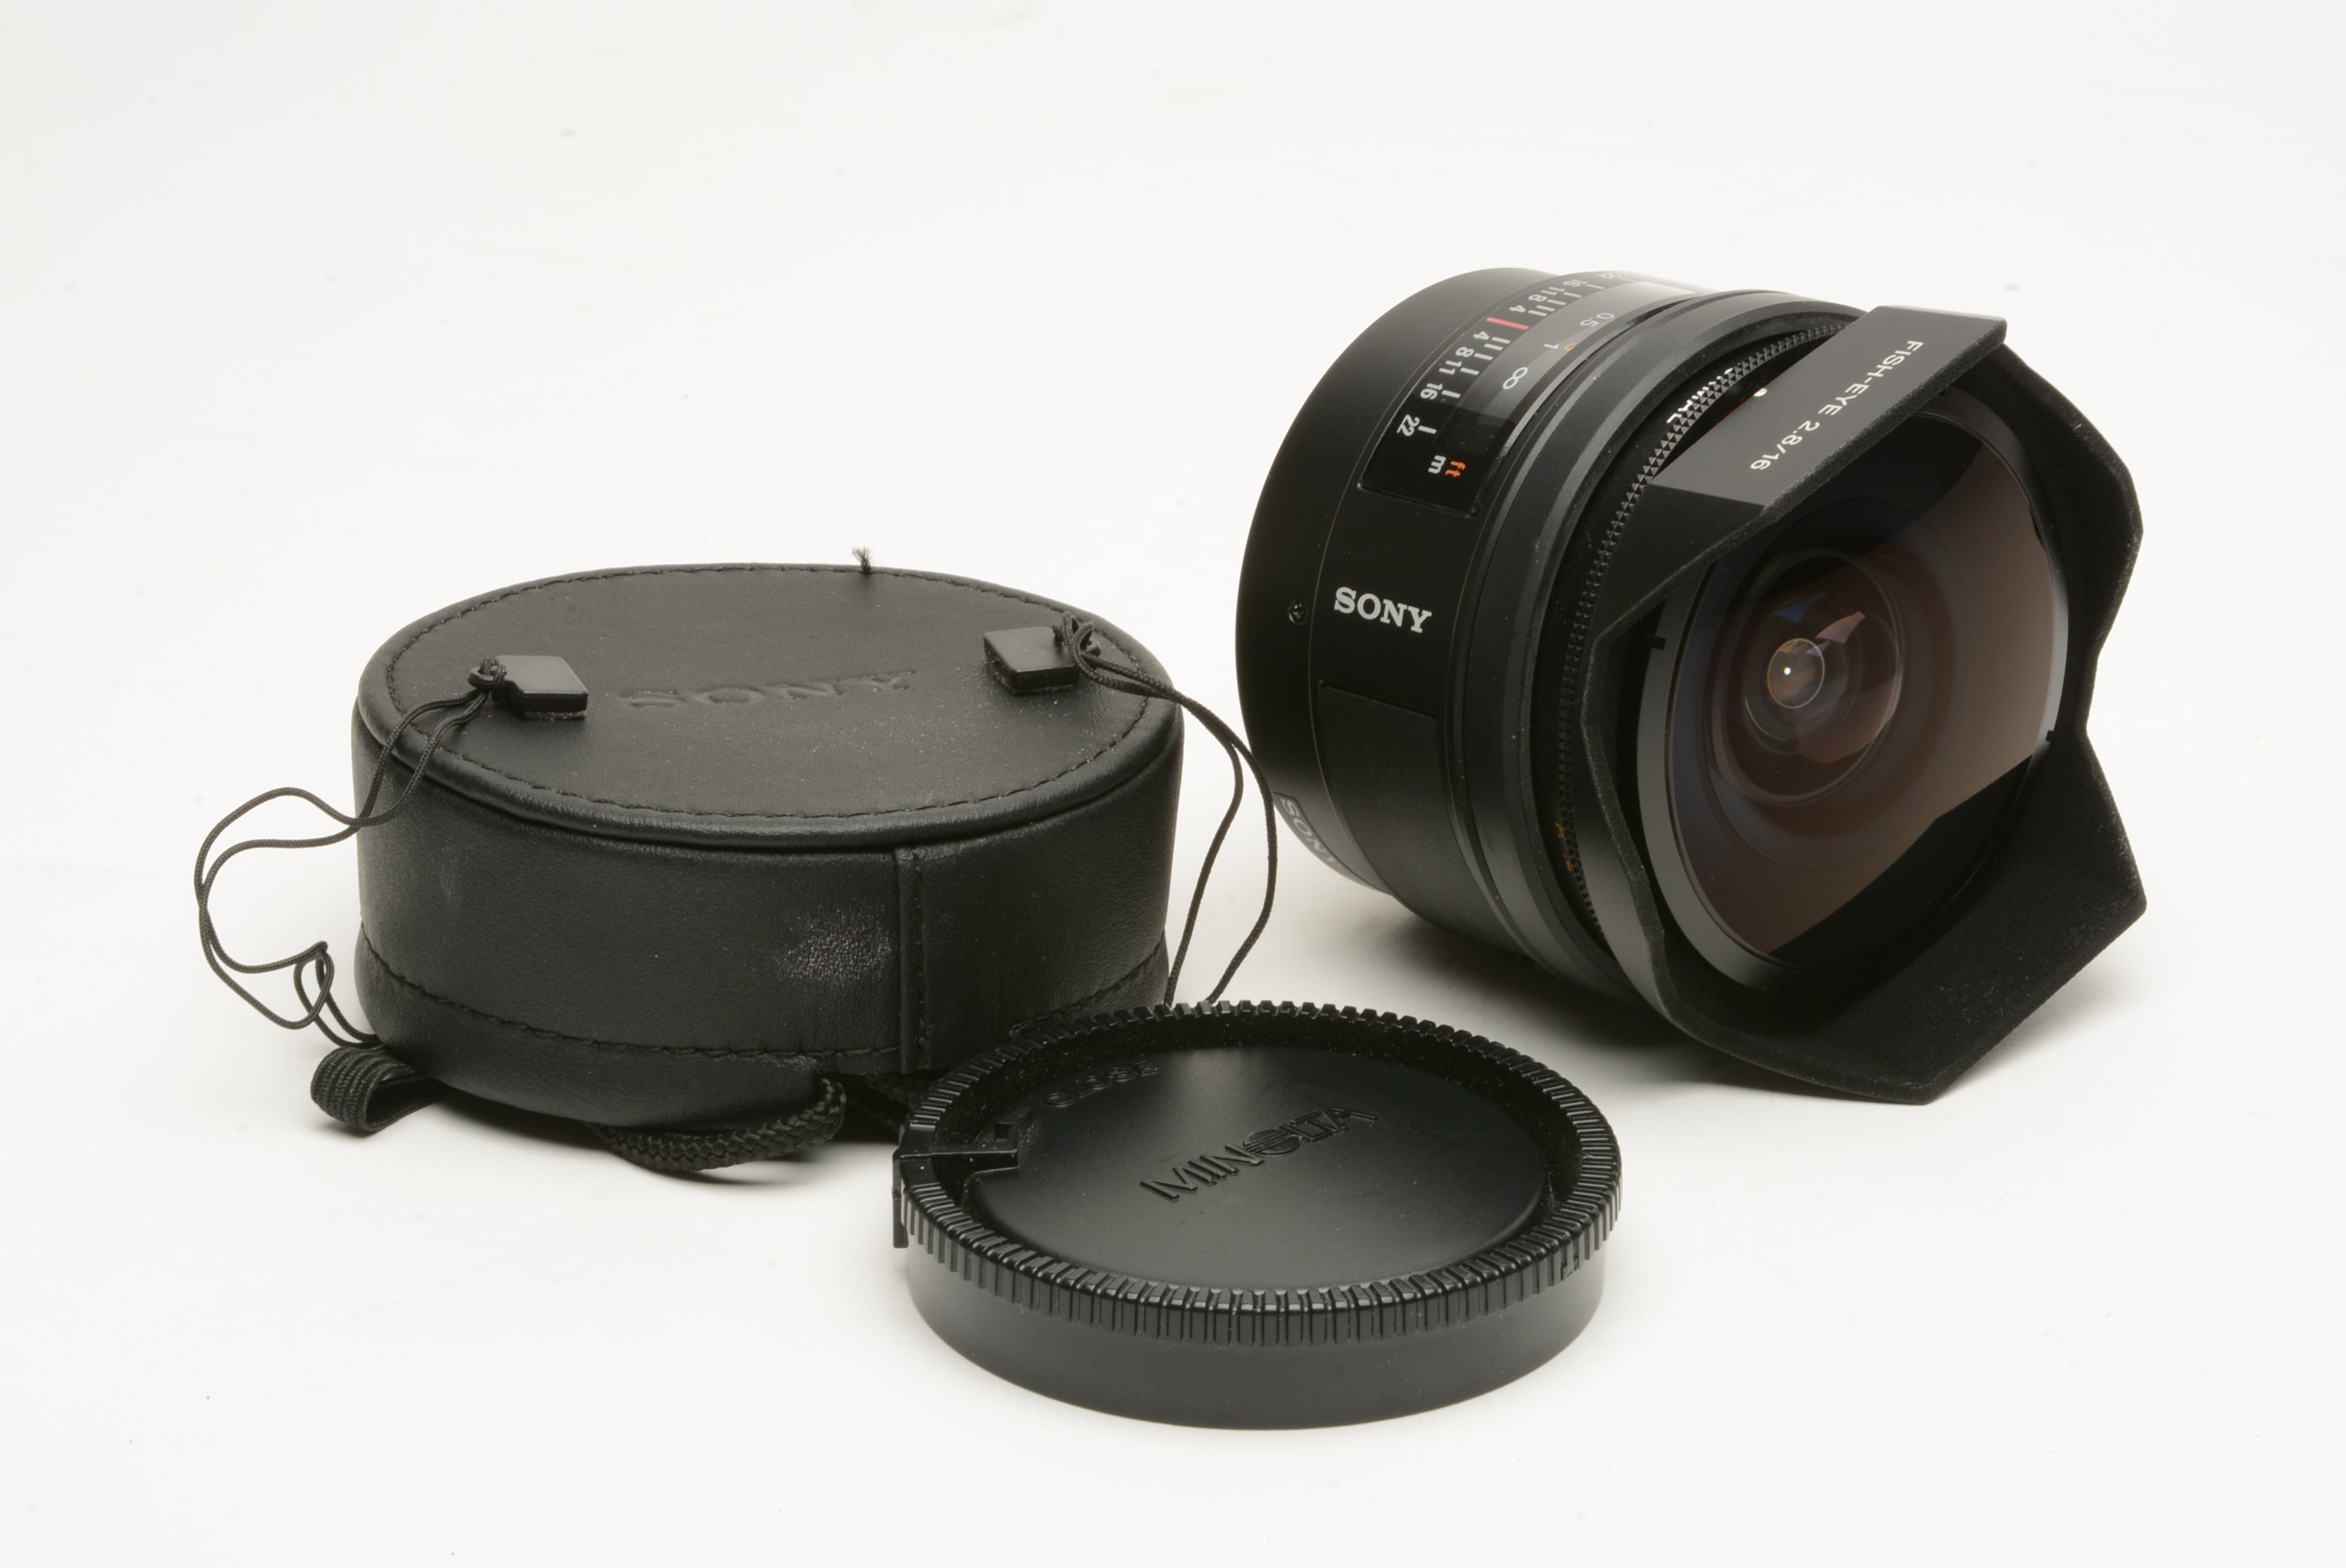 Sony 16mm F2.8 Fisheye lens SAL16F28 (SONY/Minolta A mount), caps